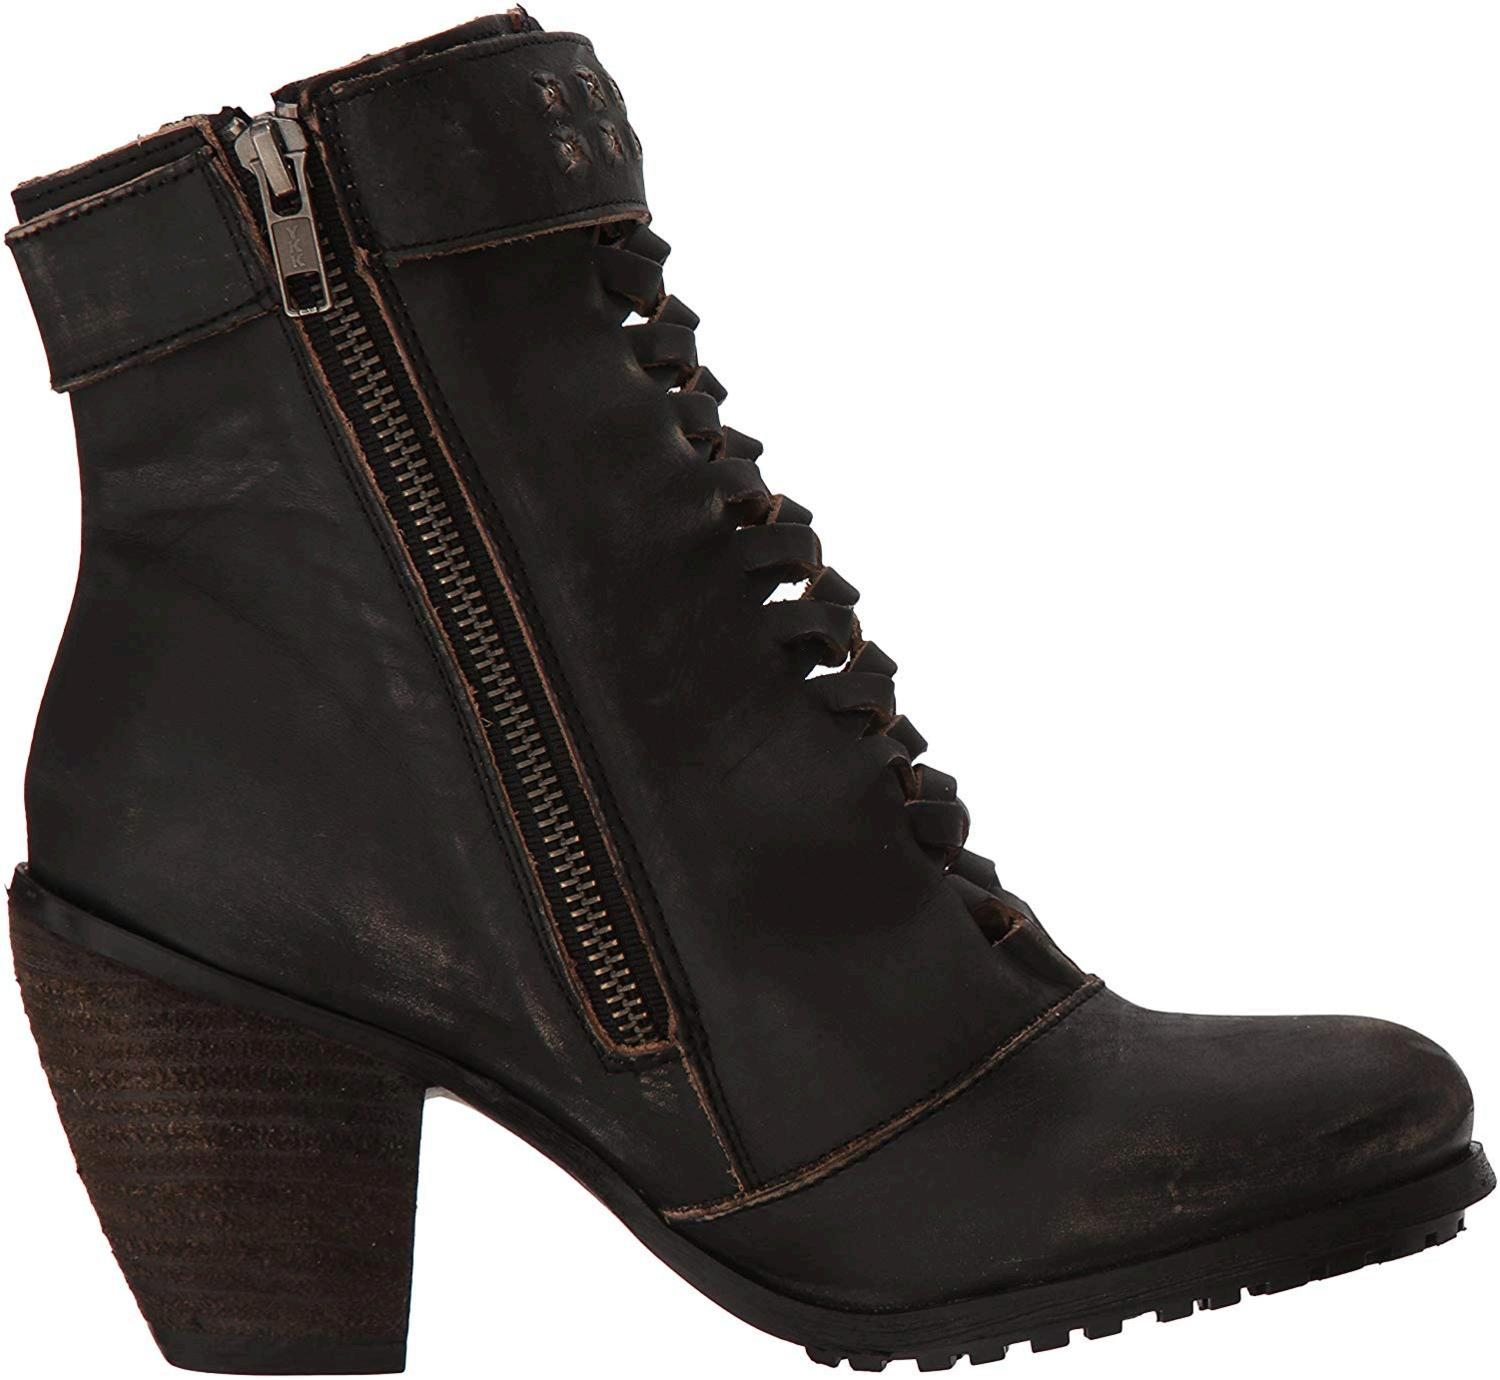 HARLEY-DAVIDSON Women's Calkins Fashion Boot, Grey, Size 8.5 MW2S ...